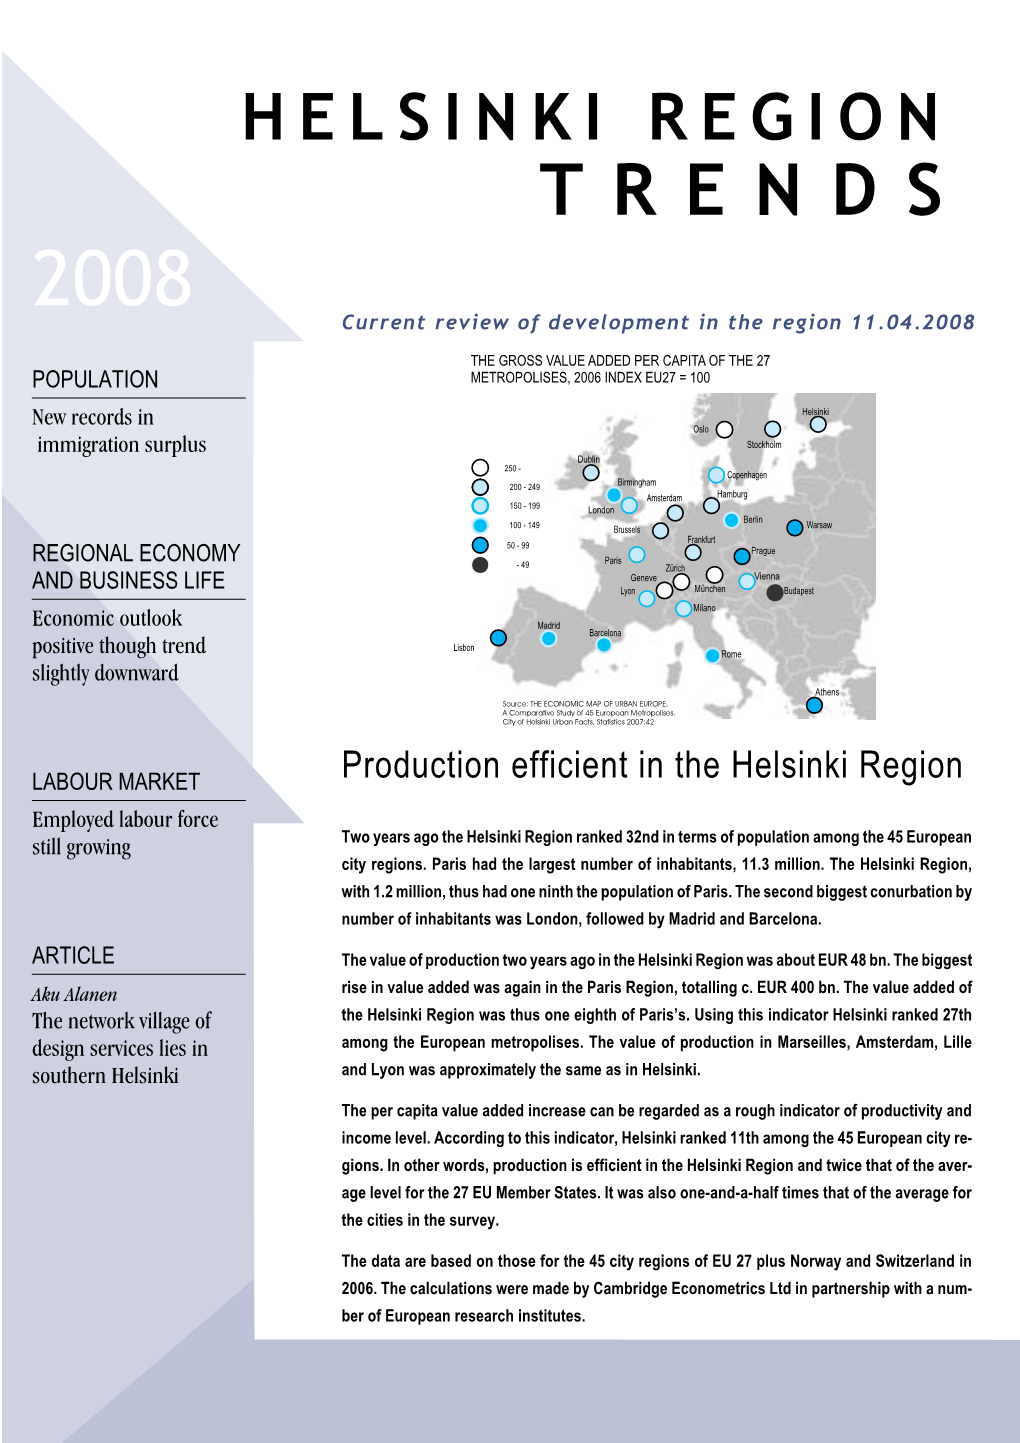 HELSINKI REGION TRENDS 2008 Current Review of Development in the Region 11.04.2008